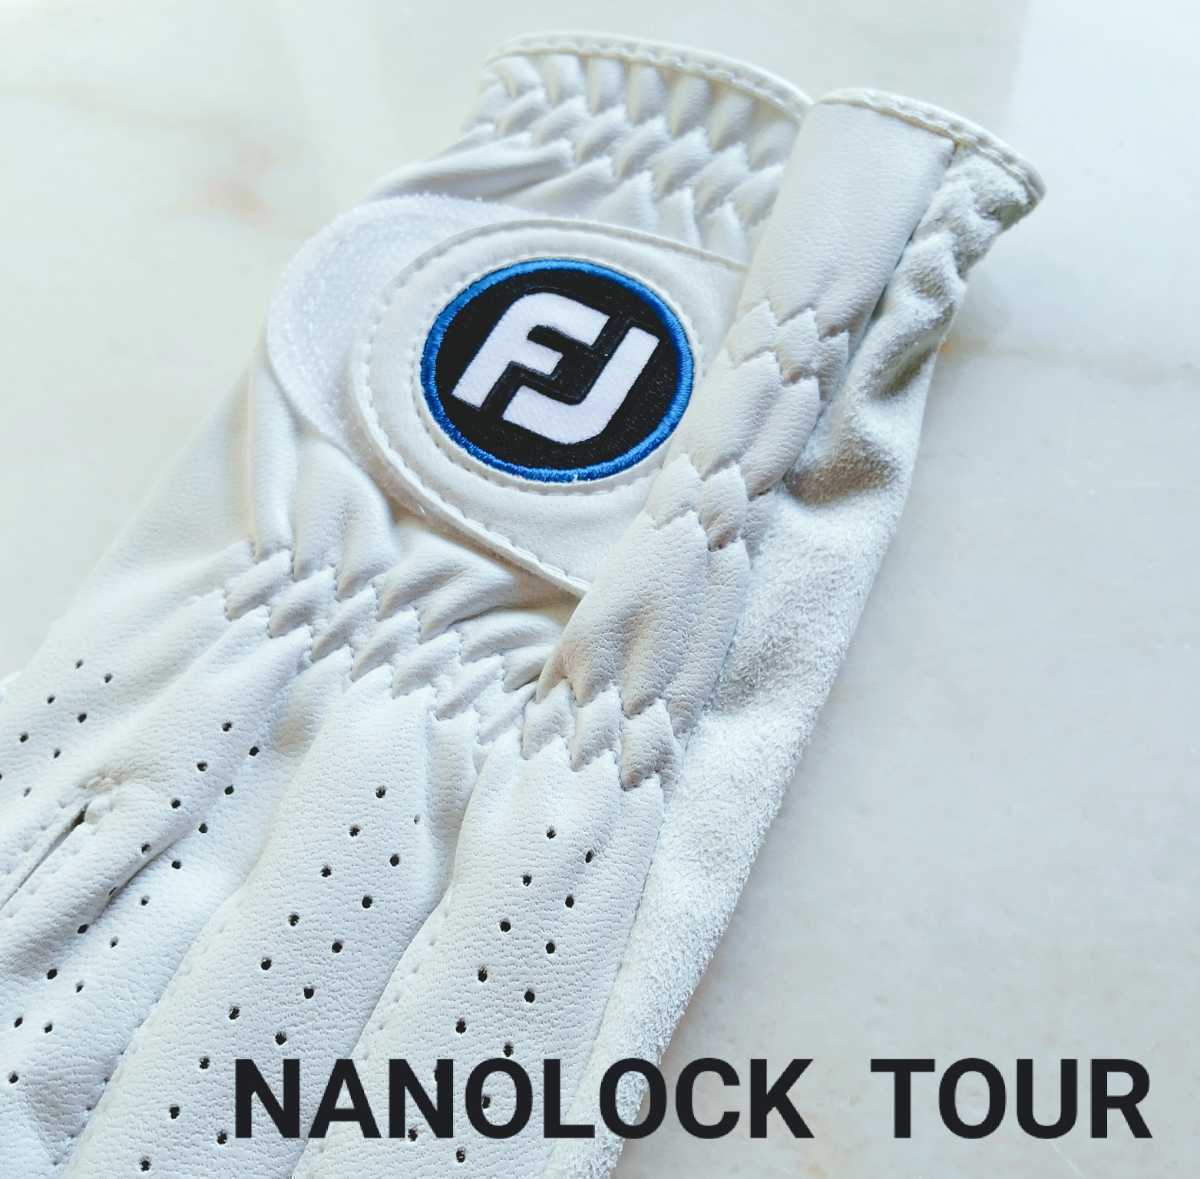 Fj nano lock Tour 21cm white 2 pieces set foot Joy Golf glove TOUR new goods unused anonymity delivery 